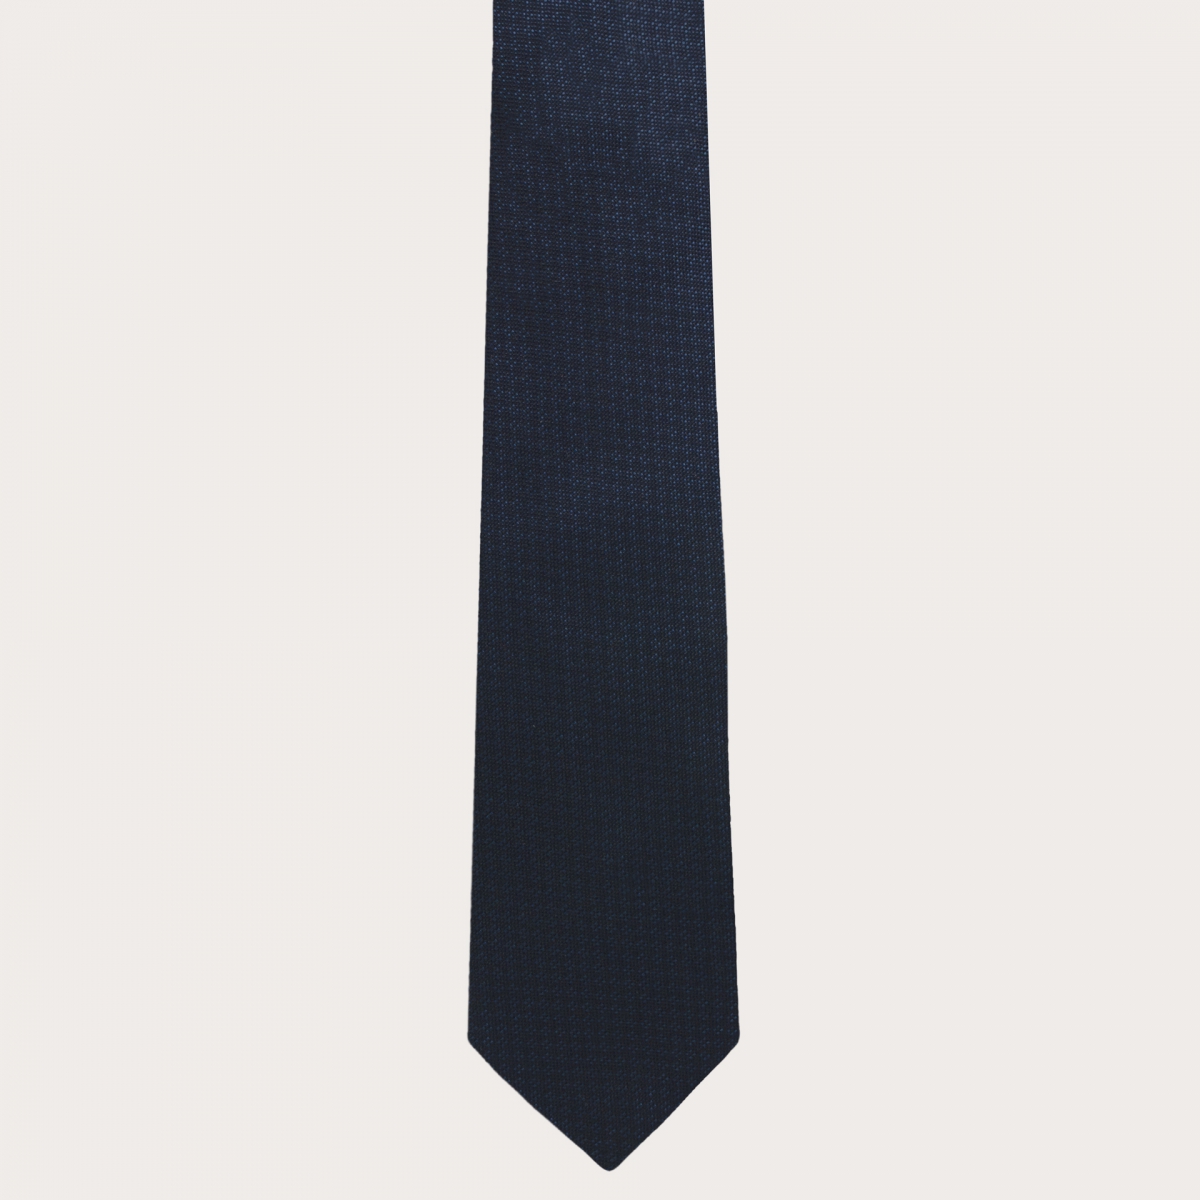 Elegante cravatta in seta jacquard, microfantasia blu